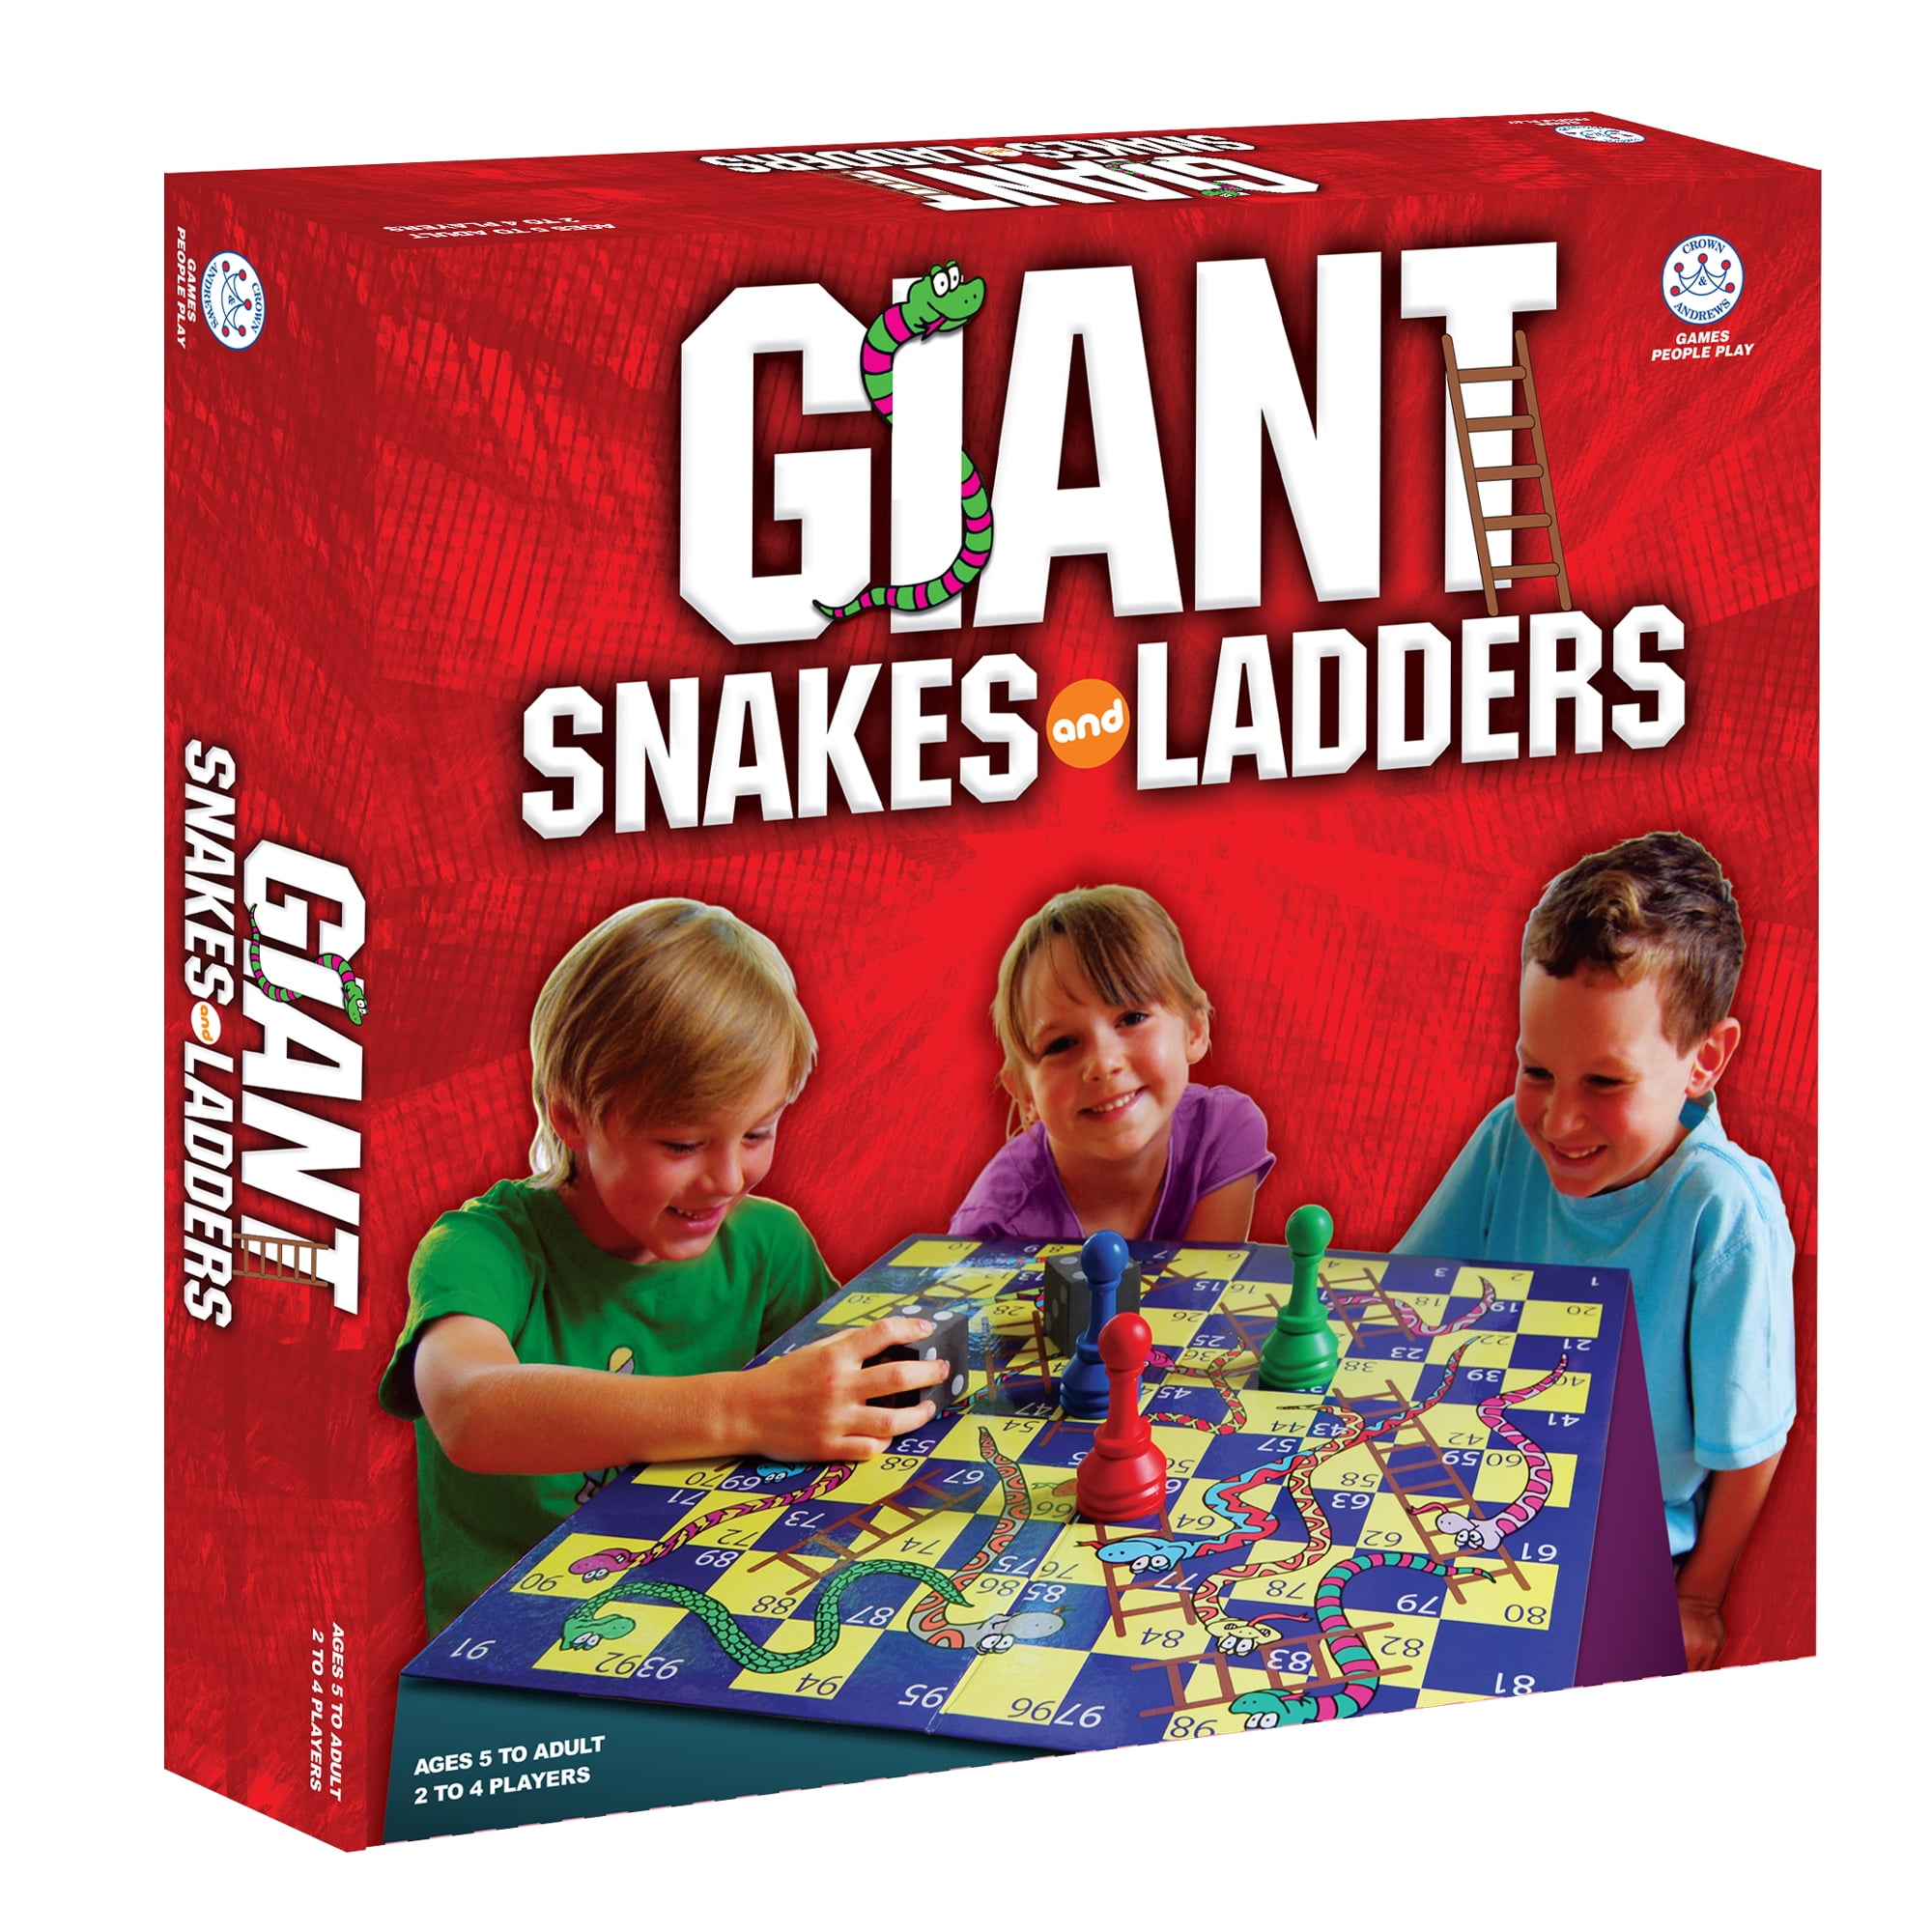 21736 Giant Snakes & Ladders